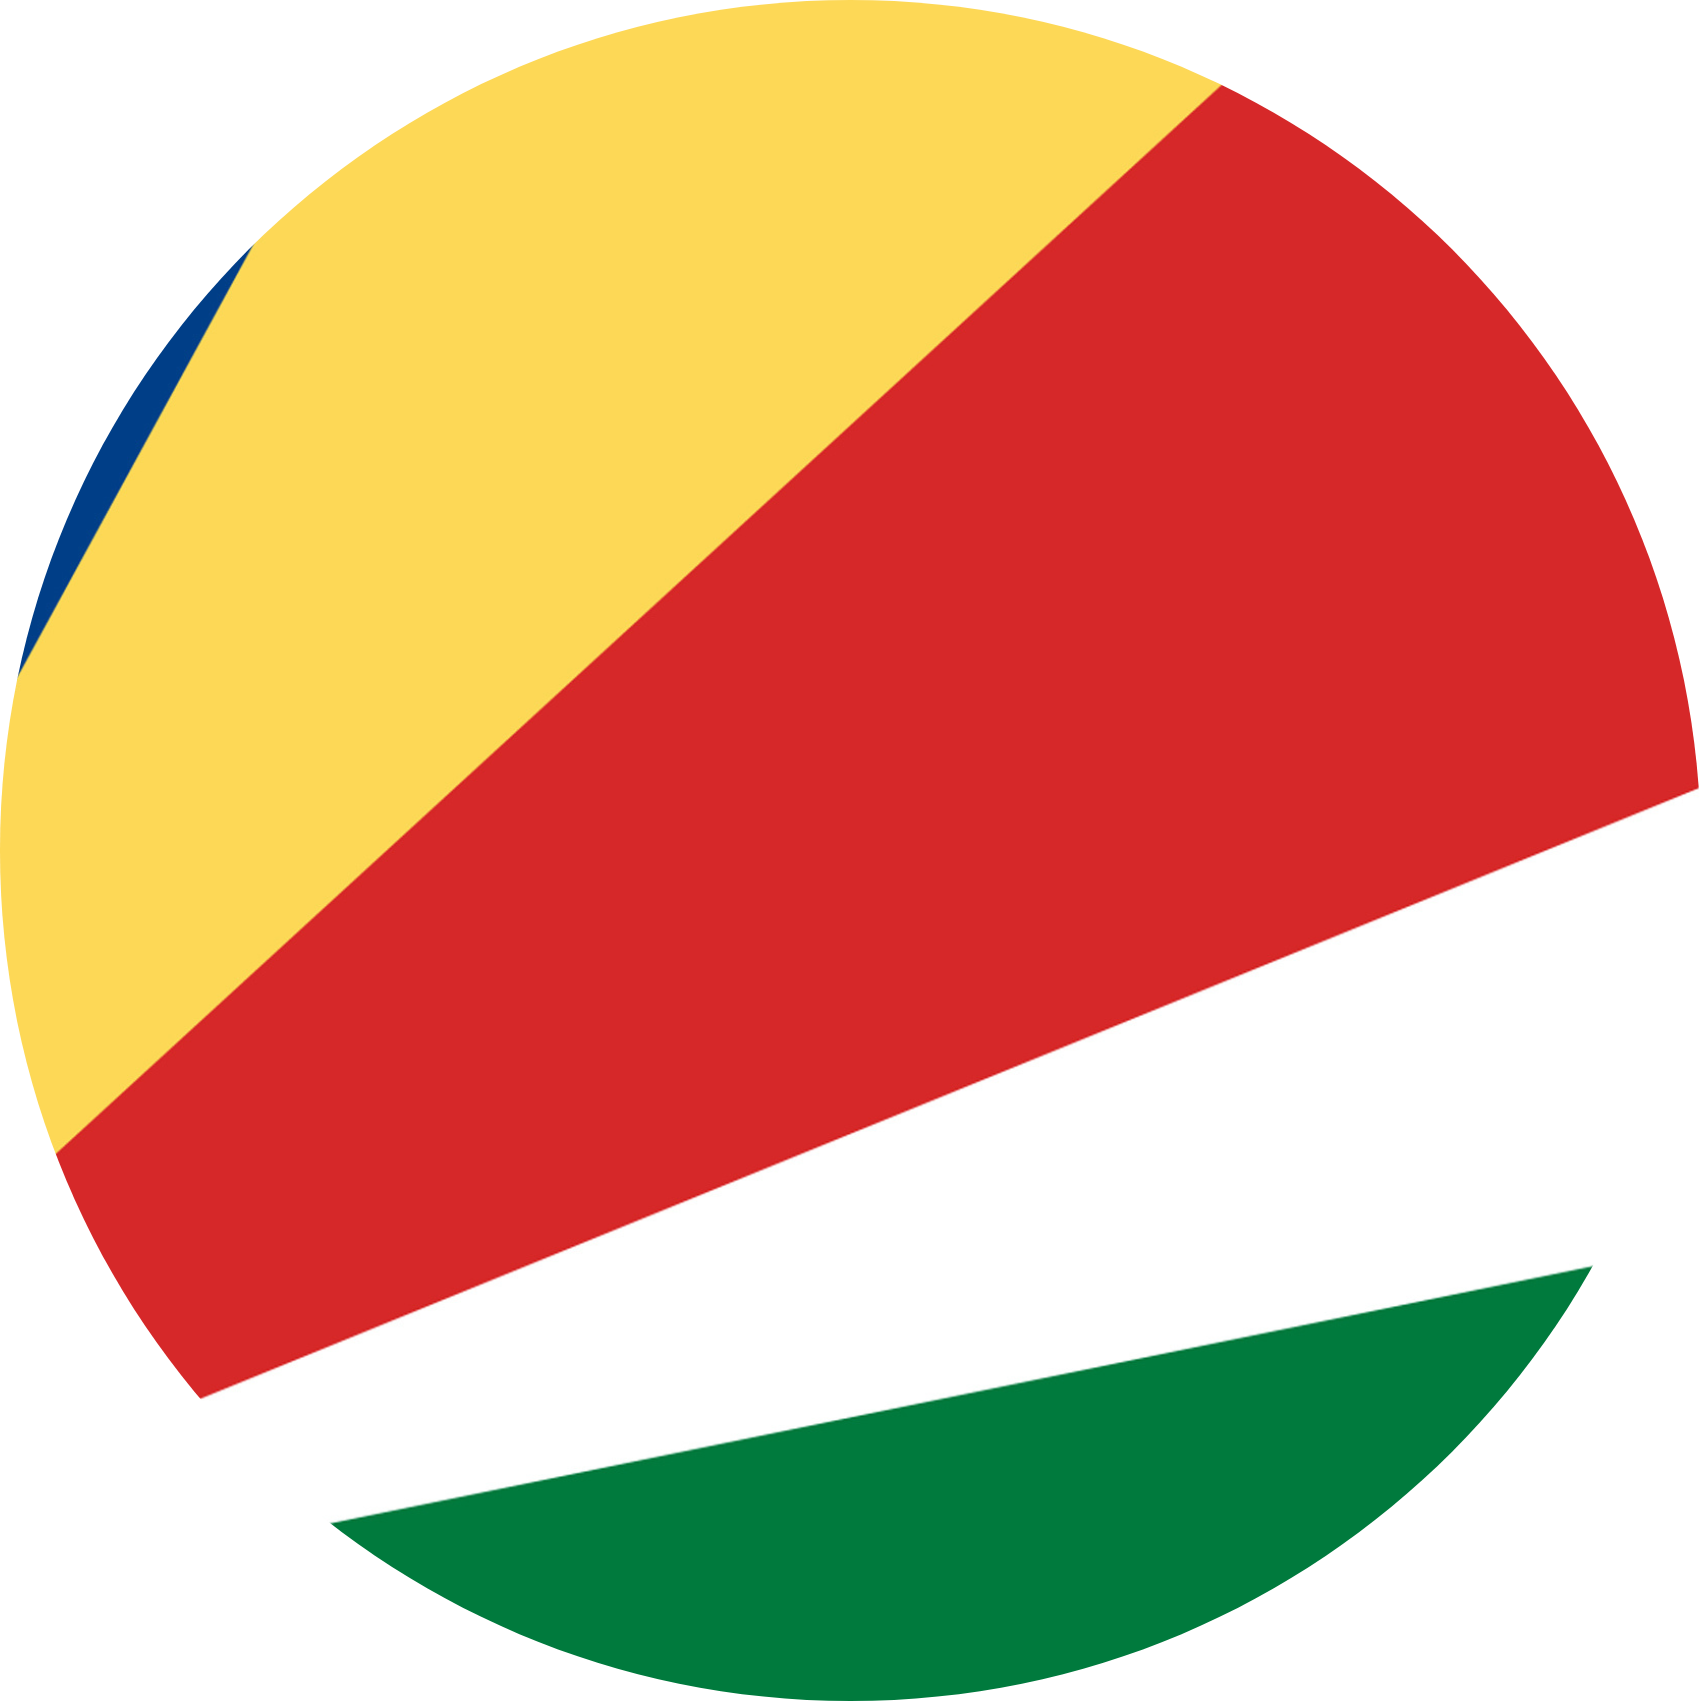 Seychelles flag in circle